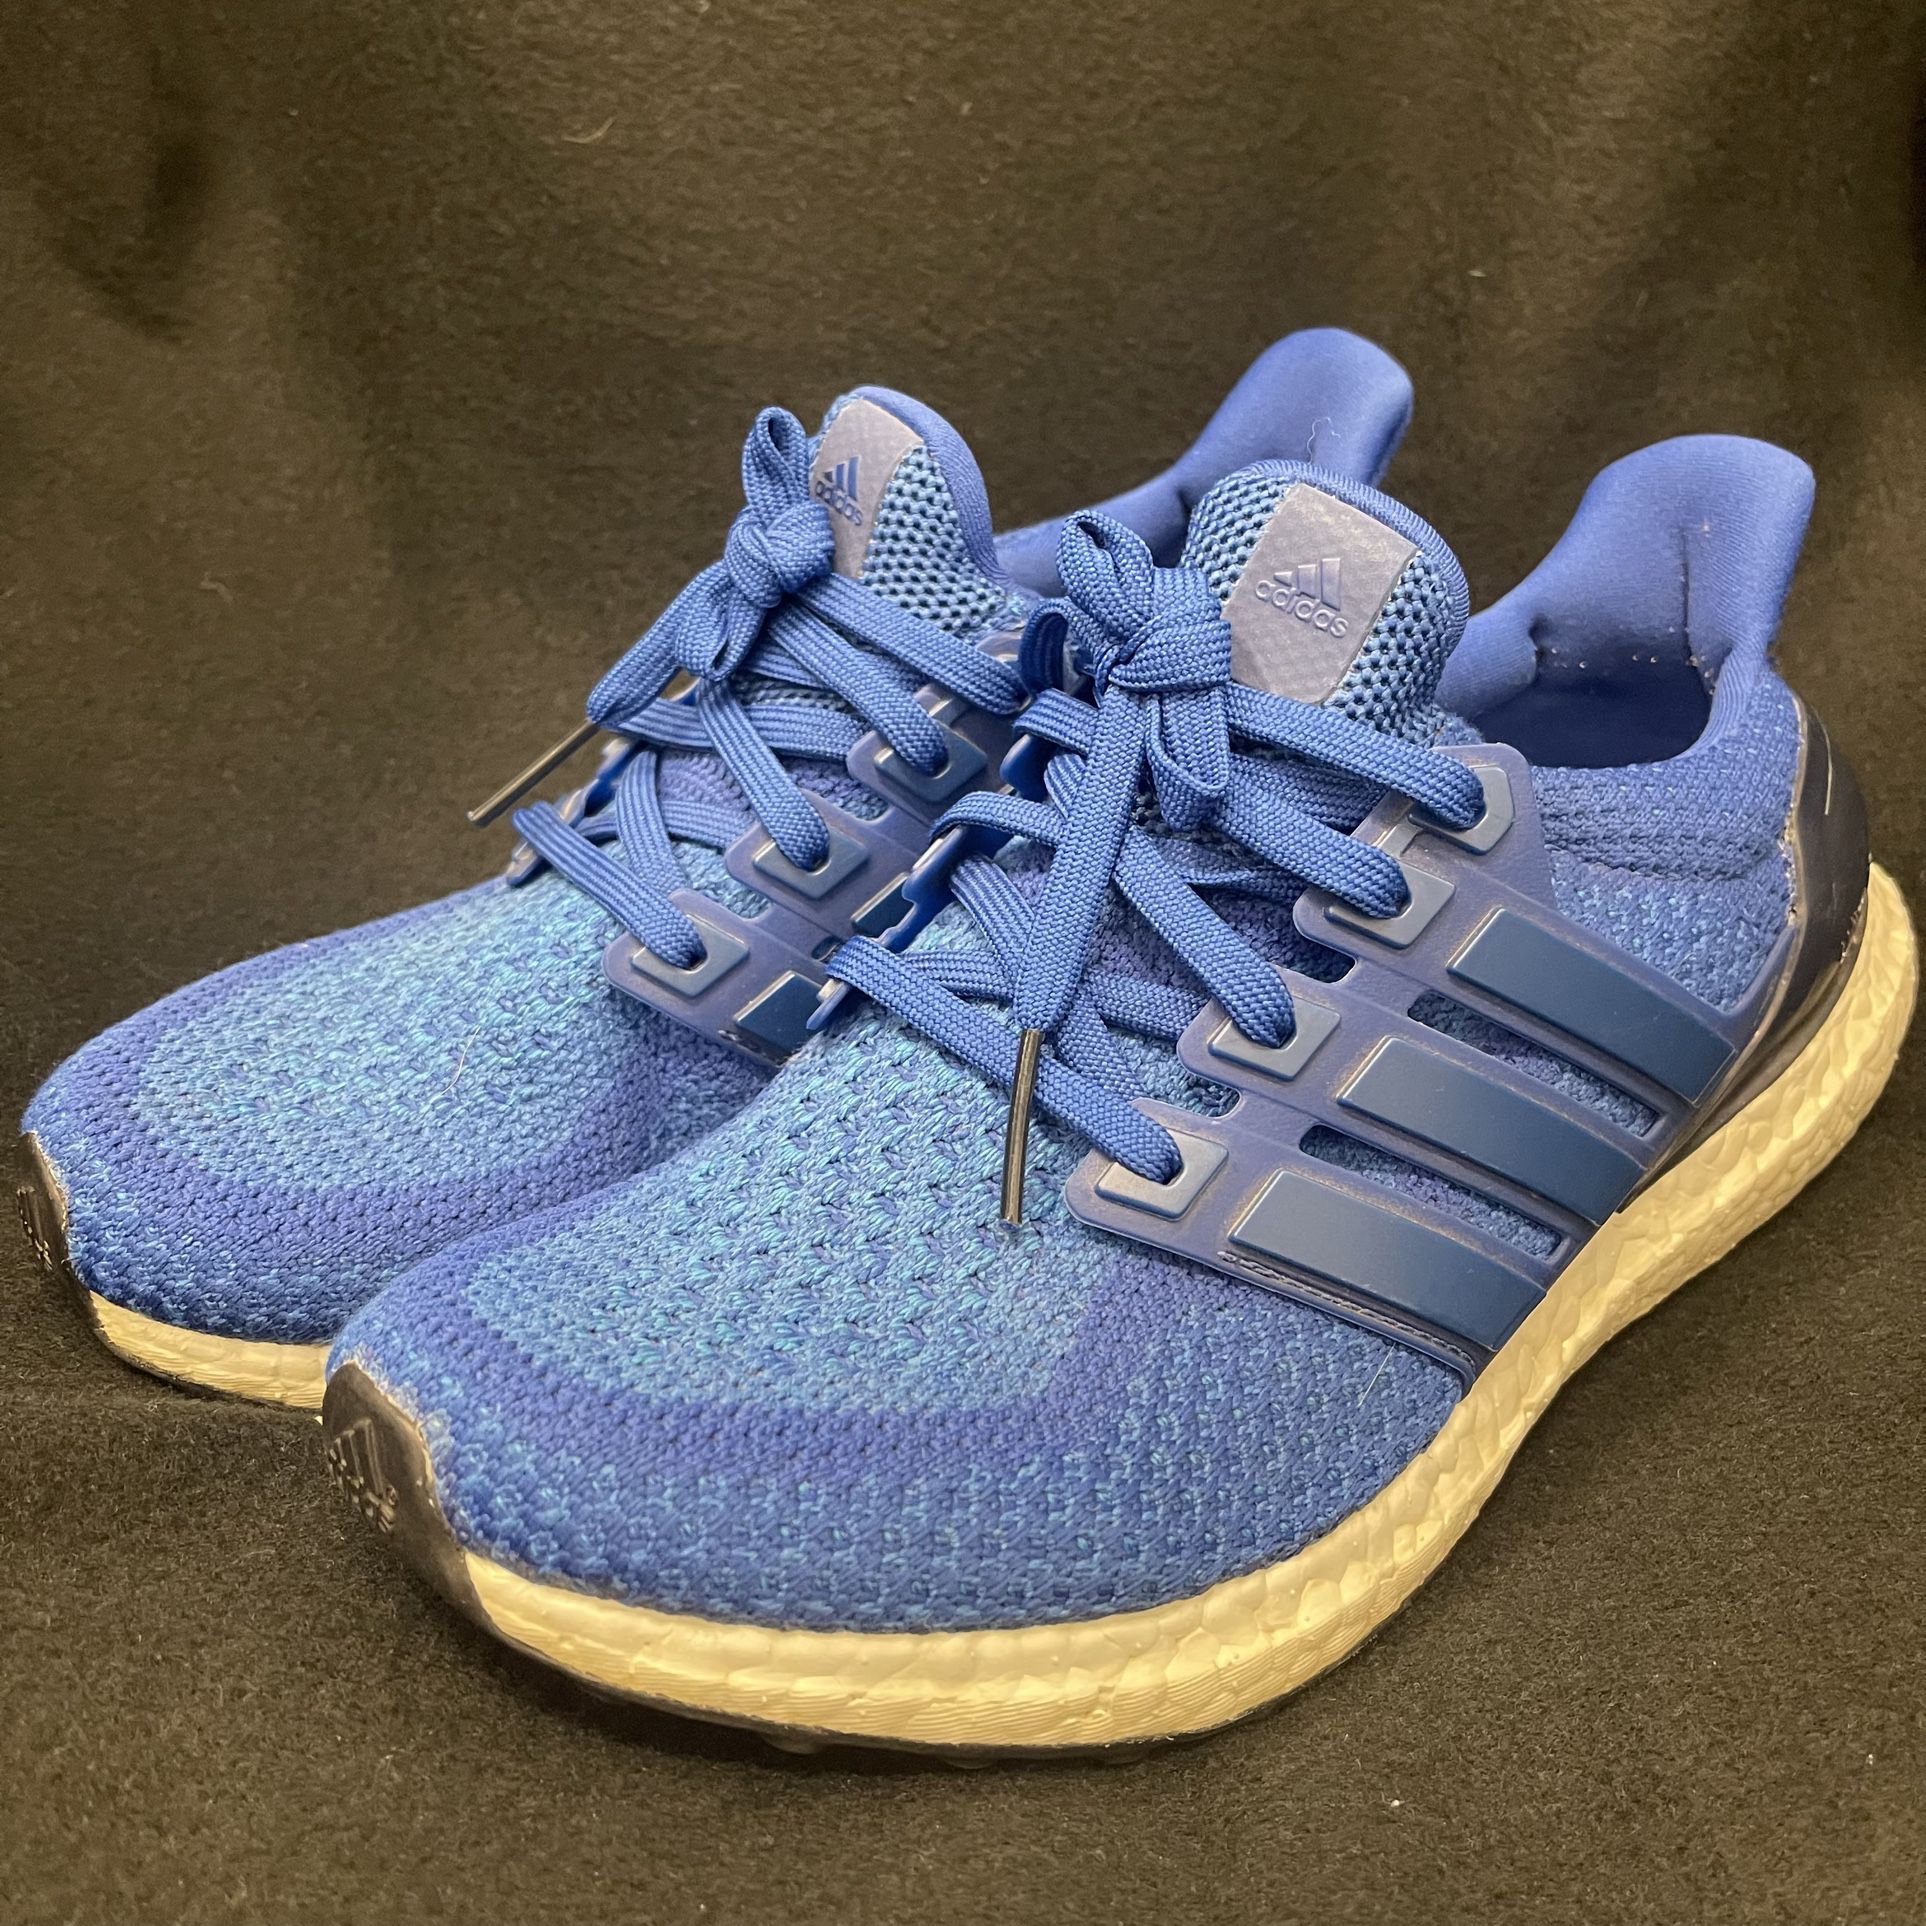 2016 Adidas Ultraboost 2.0 “Collegiate Blue” sneakers Size 8